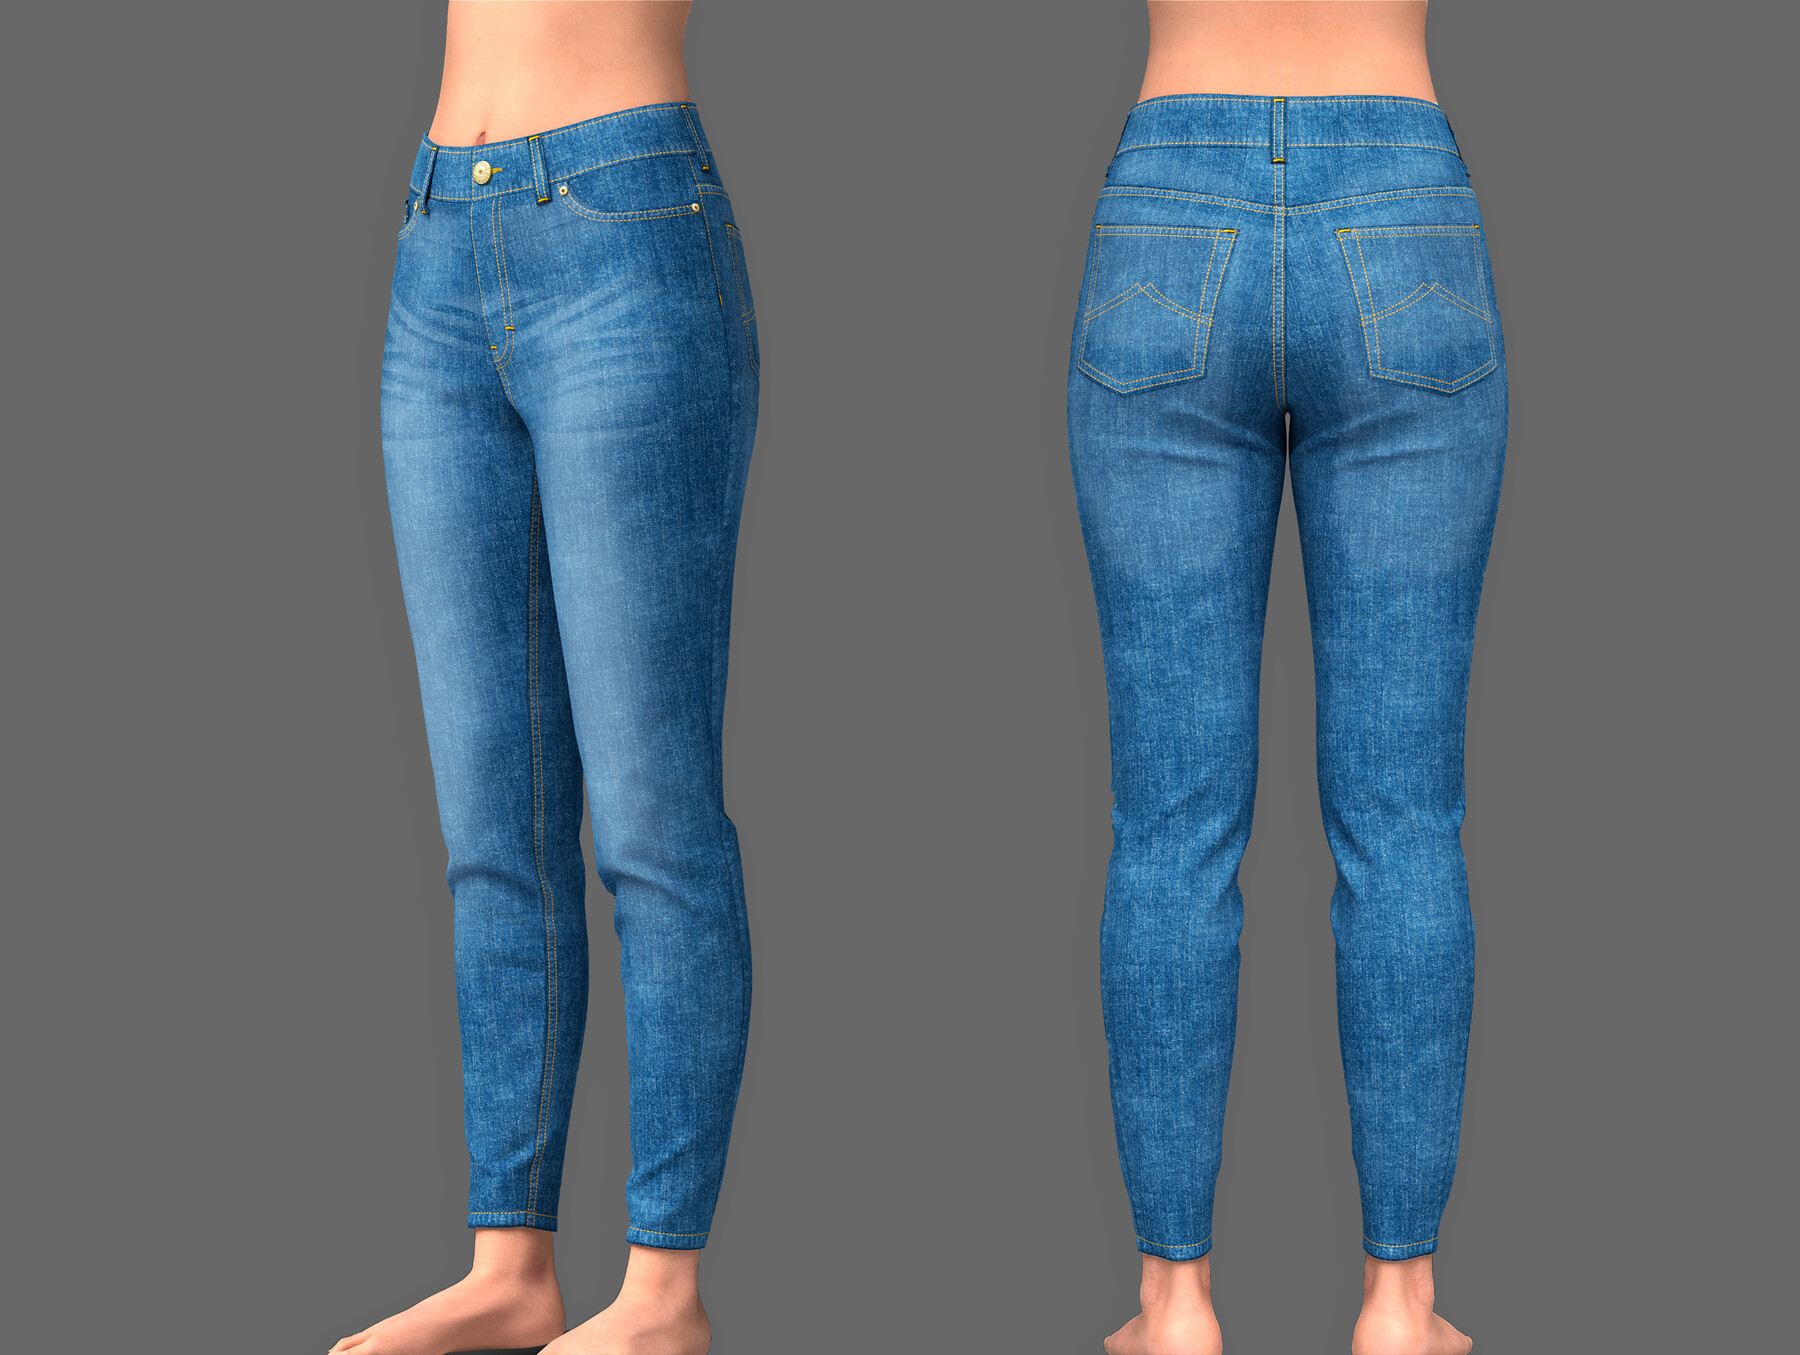 ArtStation - Women's Blue Denim Jeans | Resources